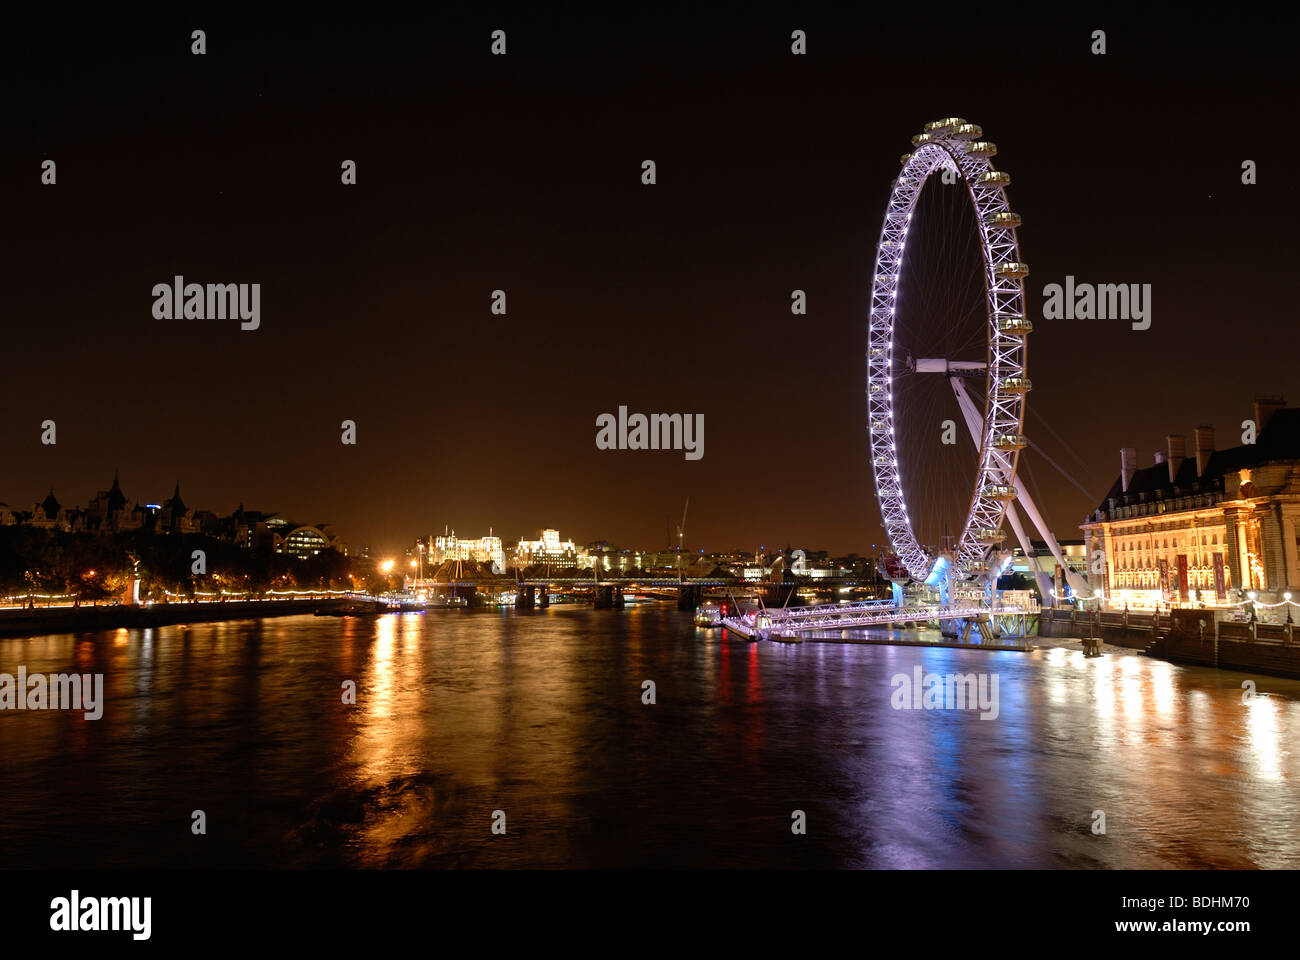 London Eye Millennium Wheel Stock Photo